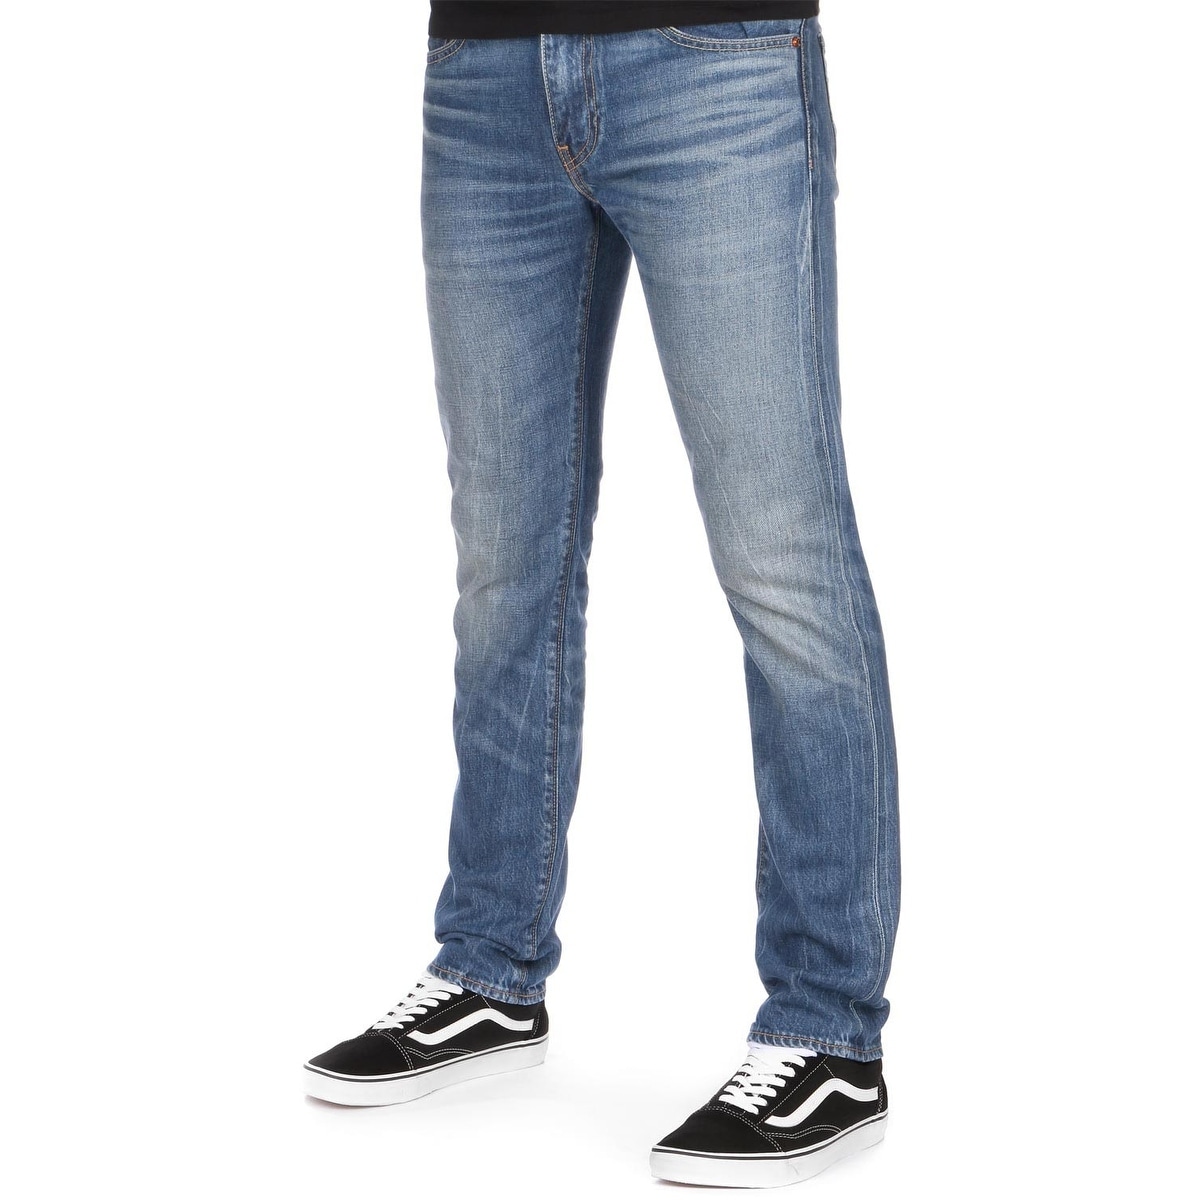 levi's men's selvedge jeans